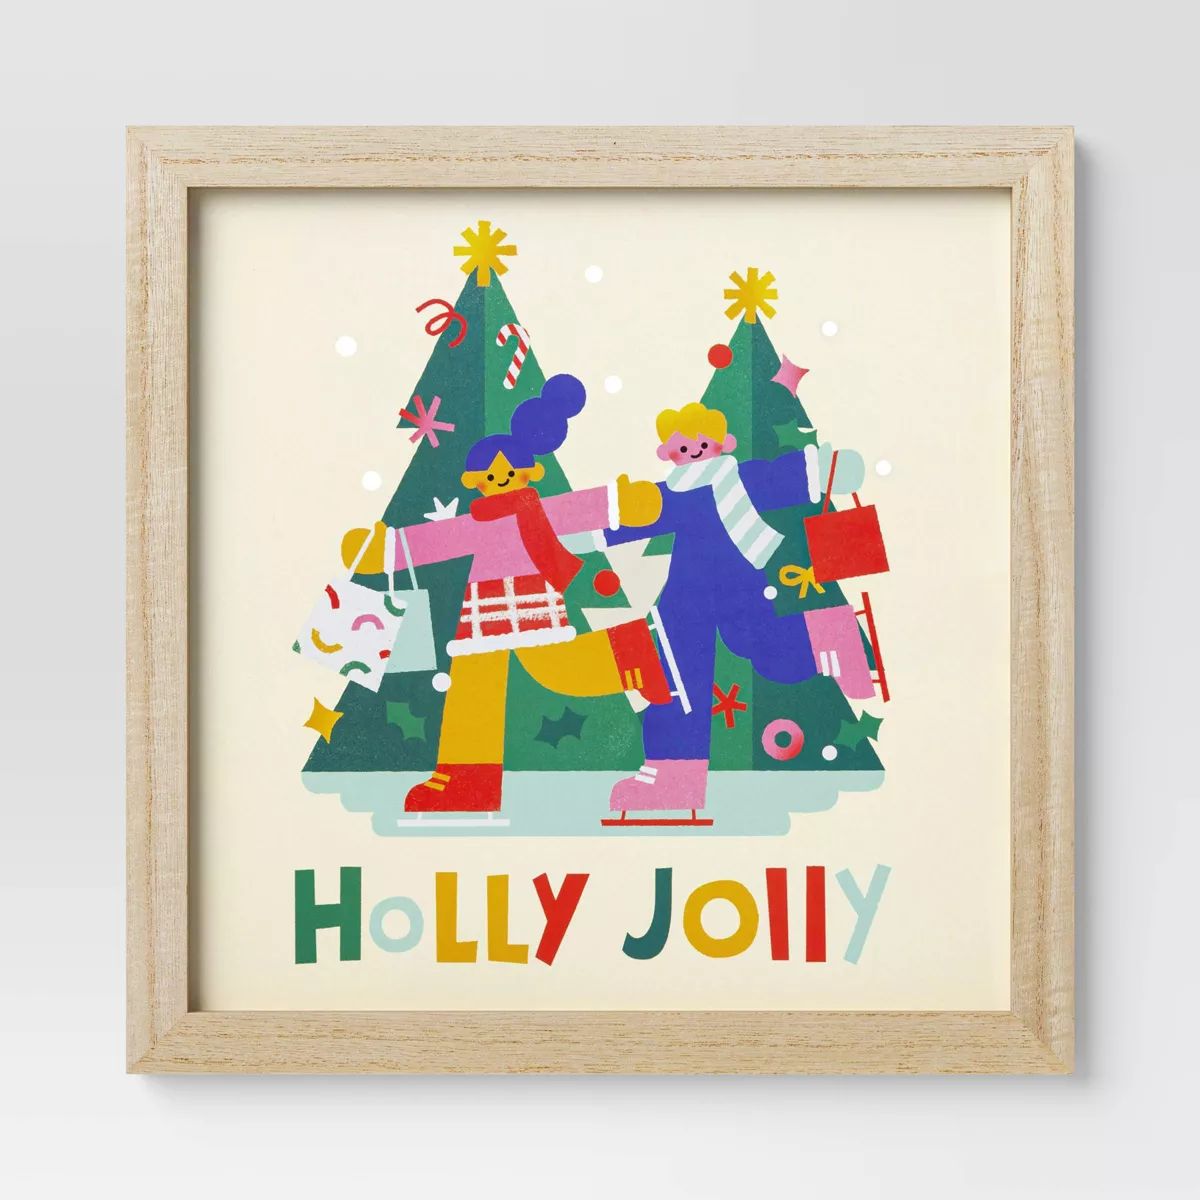 Yiffy Gu 12"x12" 'Holly Jolly' Ice Skating Framed Wall Art - Wondershop™ | Target